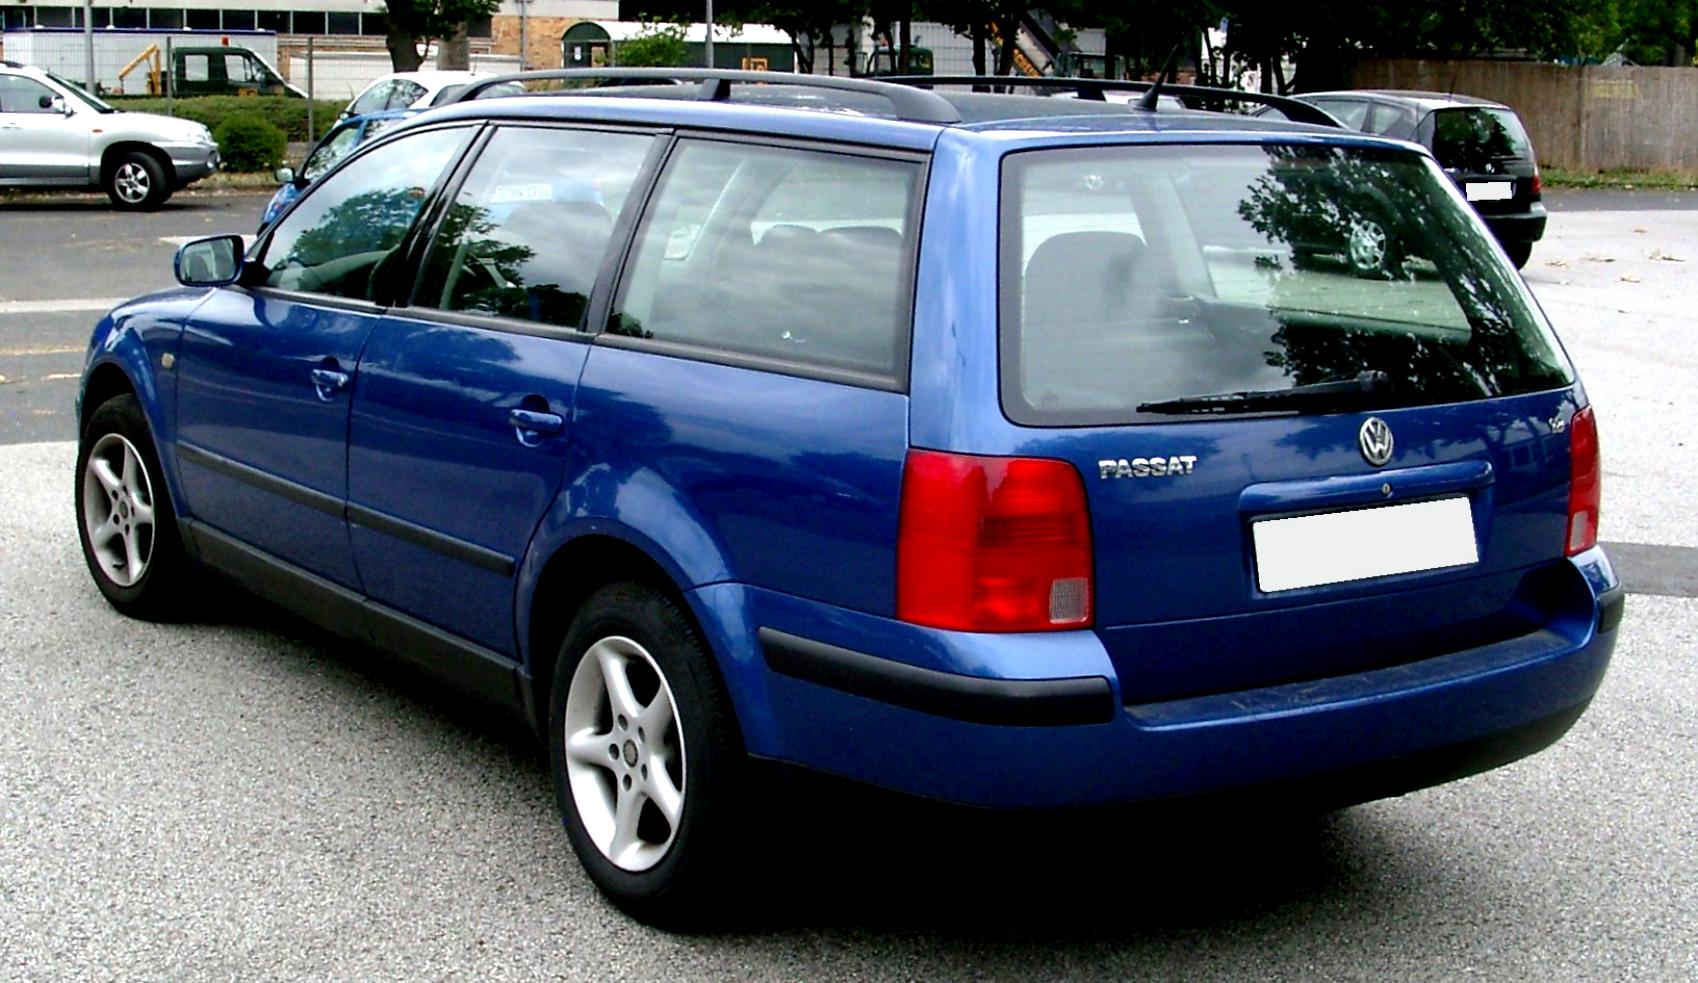 Пассат б5 1.8 универсал. VW Passat b5 variant. Фольксваген Пассат в5 универсал. VW Passat b5 универсал. VW Passat variant b5 1999.